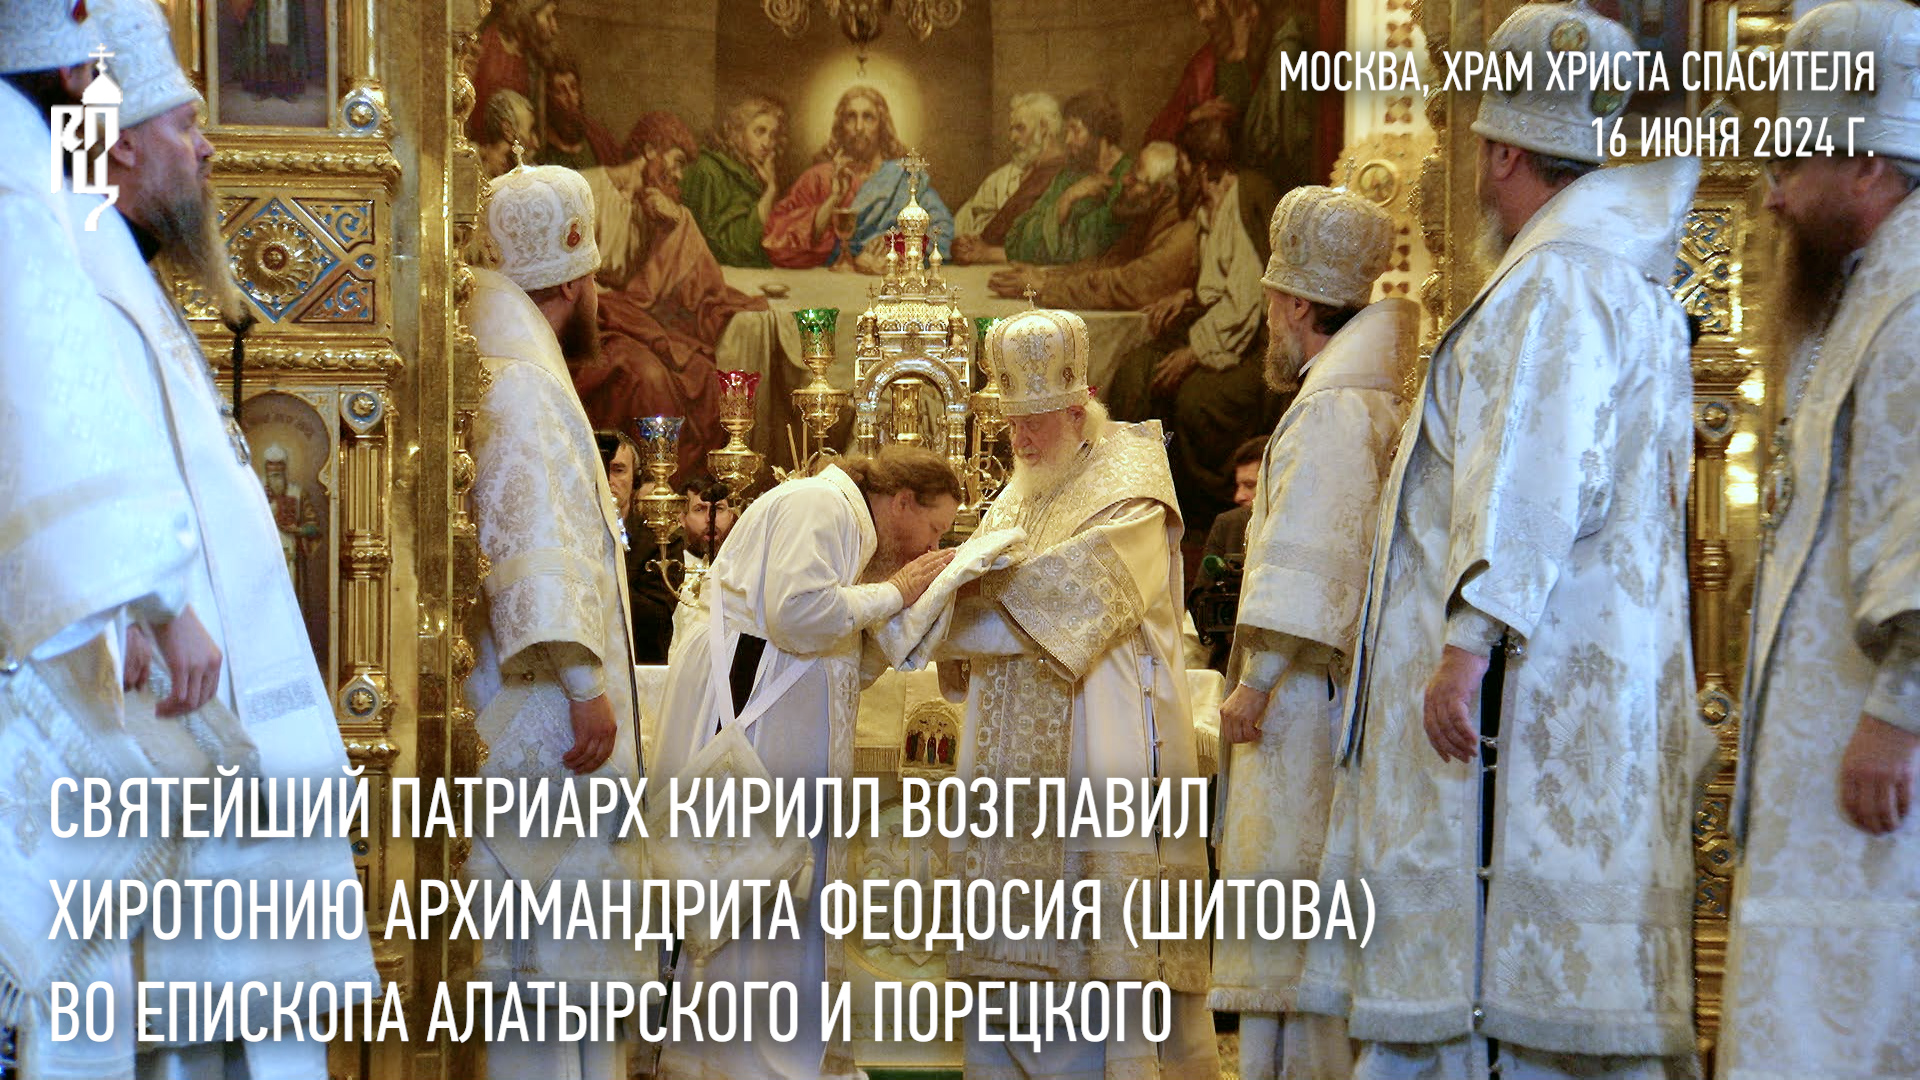 Святейший Патриарх Кирирлл возглавил хиротонию архимандрита Феодосия (Шитова) во епископы